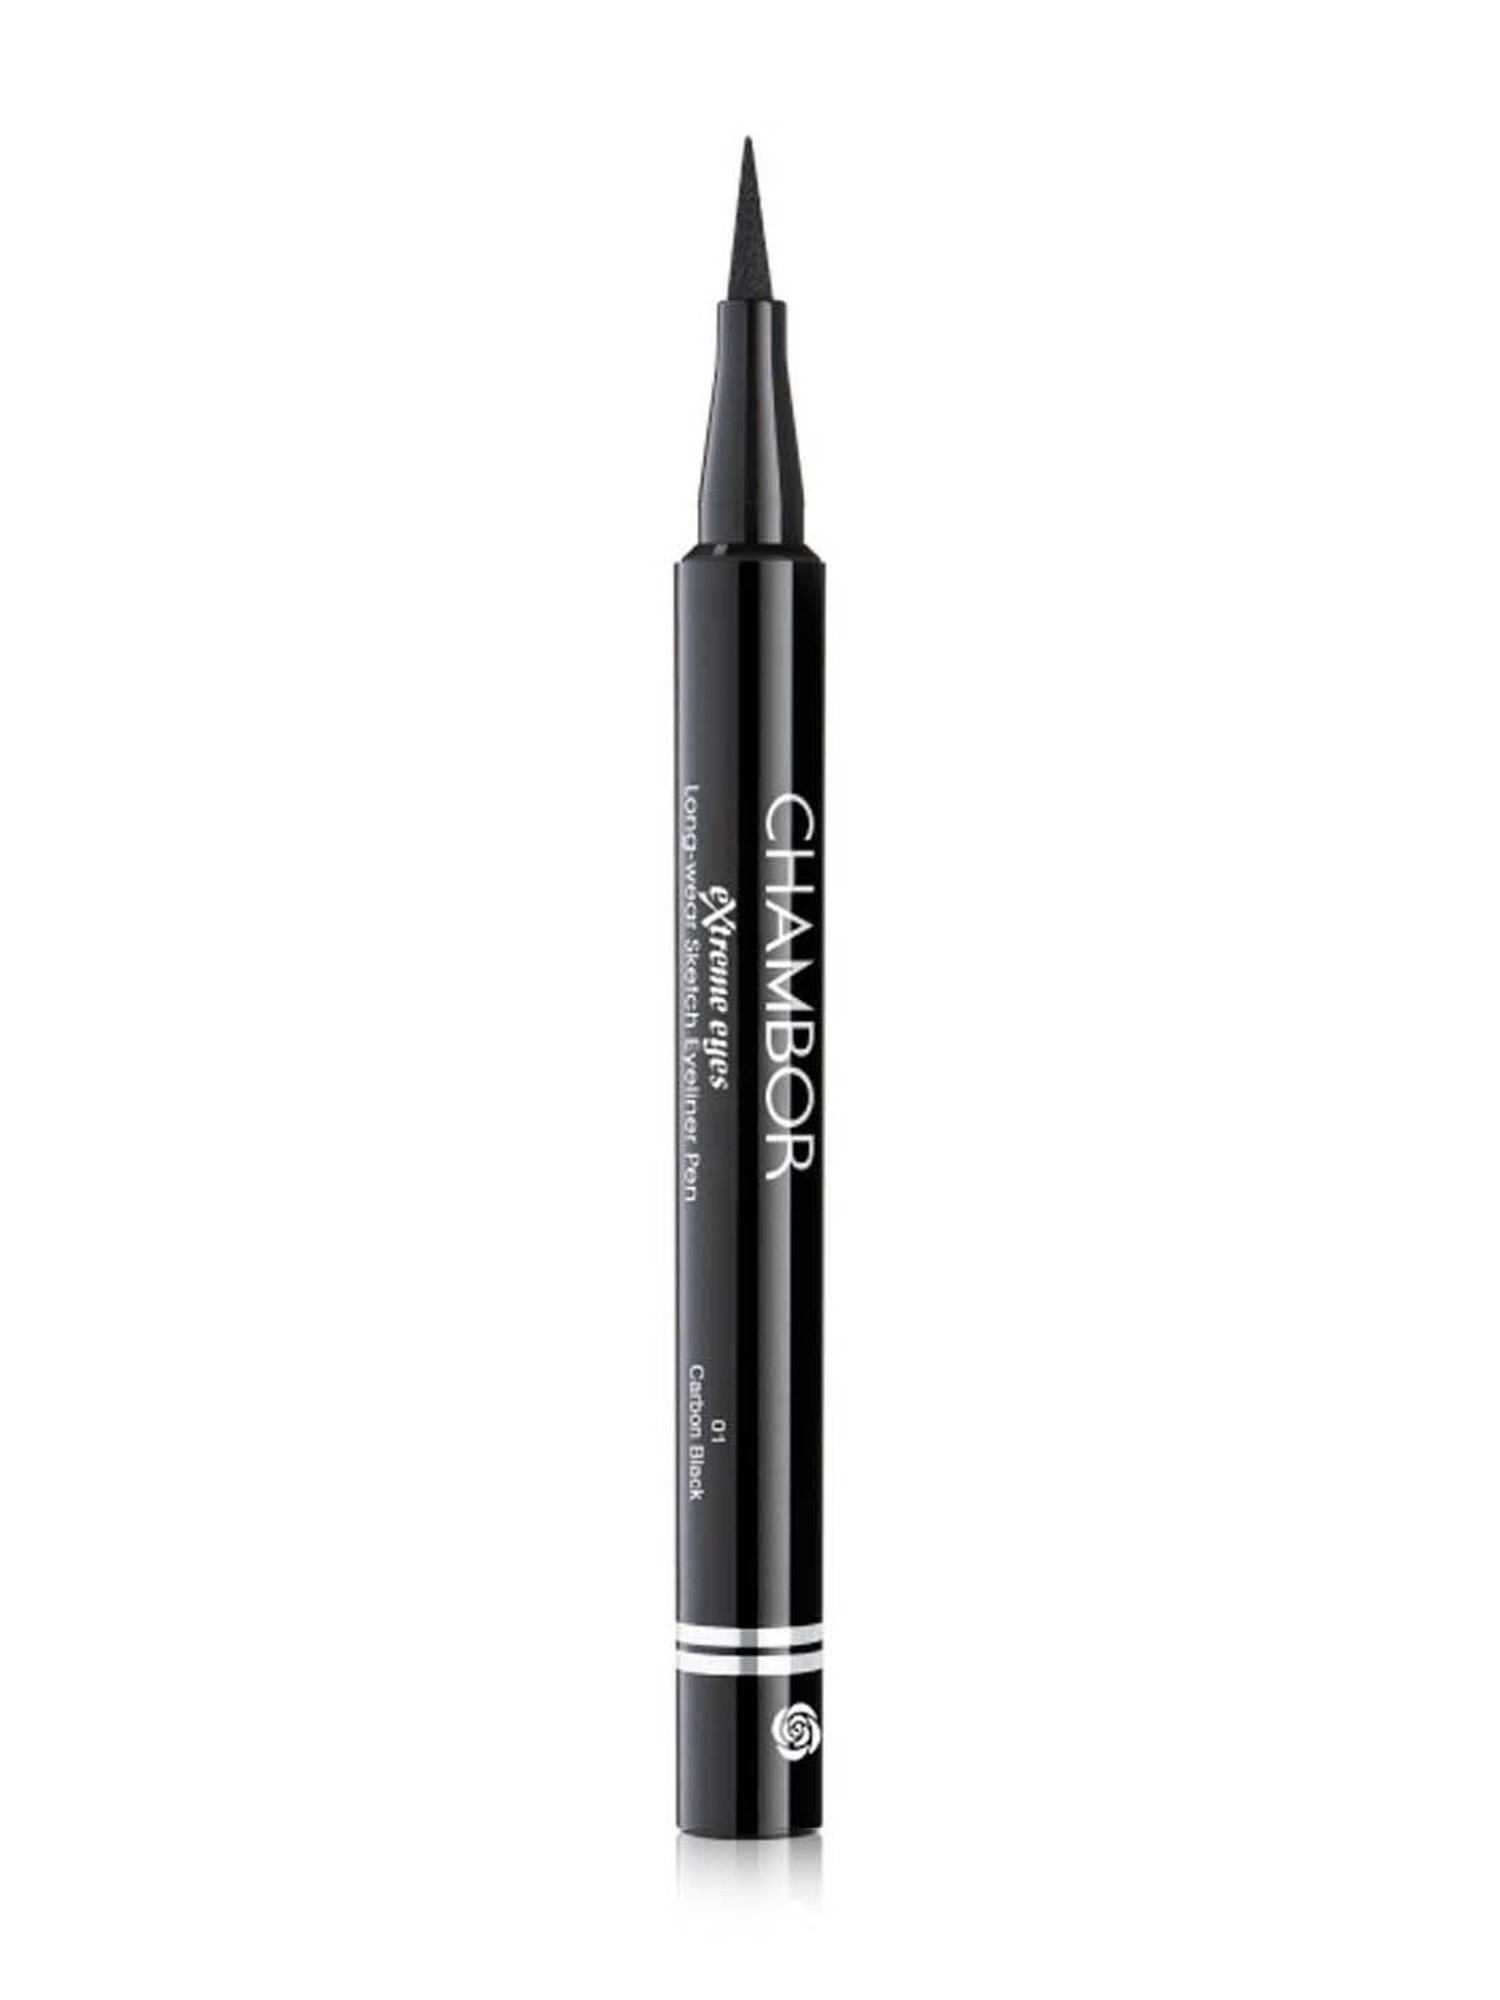 Buy MILAP Sketch Artist Black Eyeliner Waterproof  Eyeliner Pencil Black  Pen  Eyeliner Eye Makeup  12ml Online at Low Prices in India  Amazonin